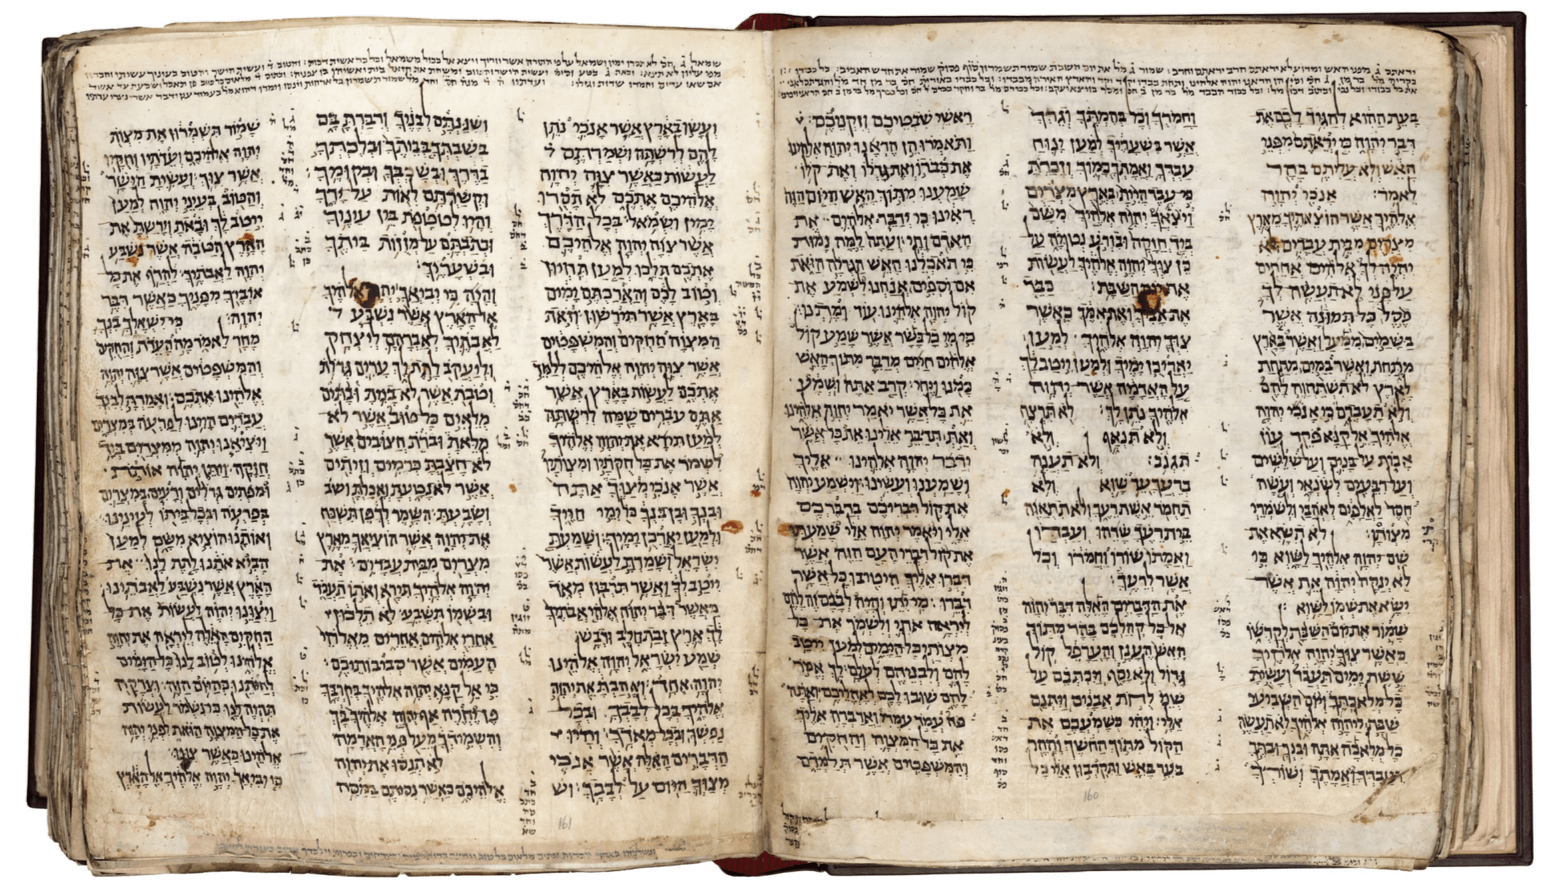 The Codex Sassoon